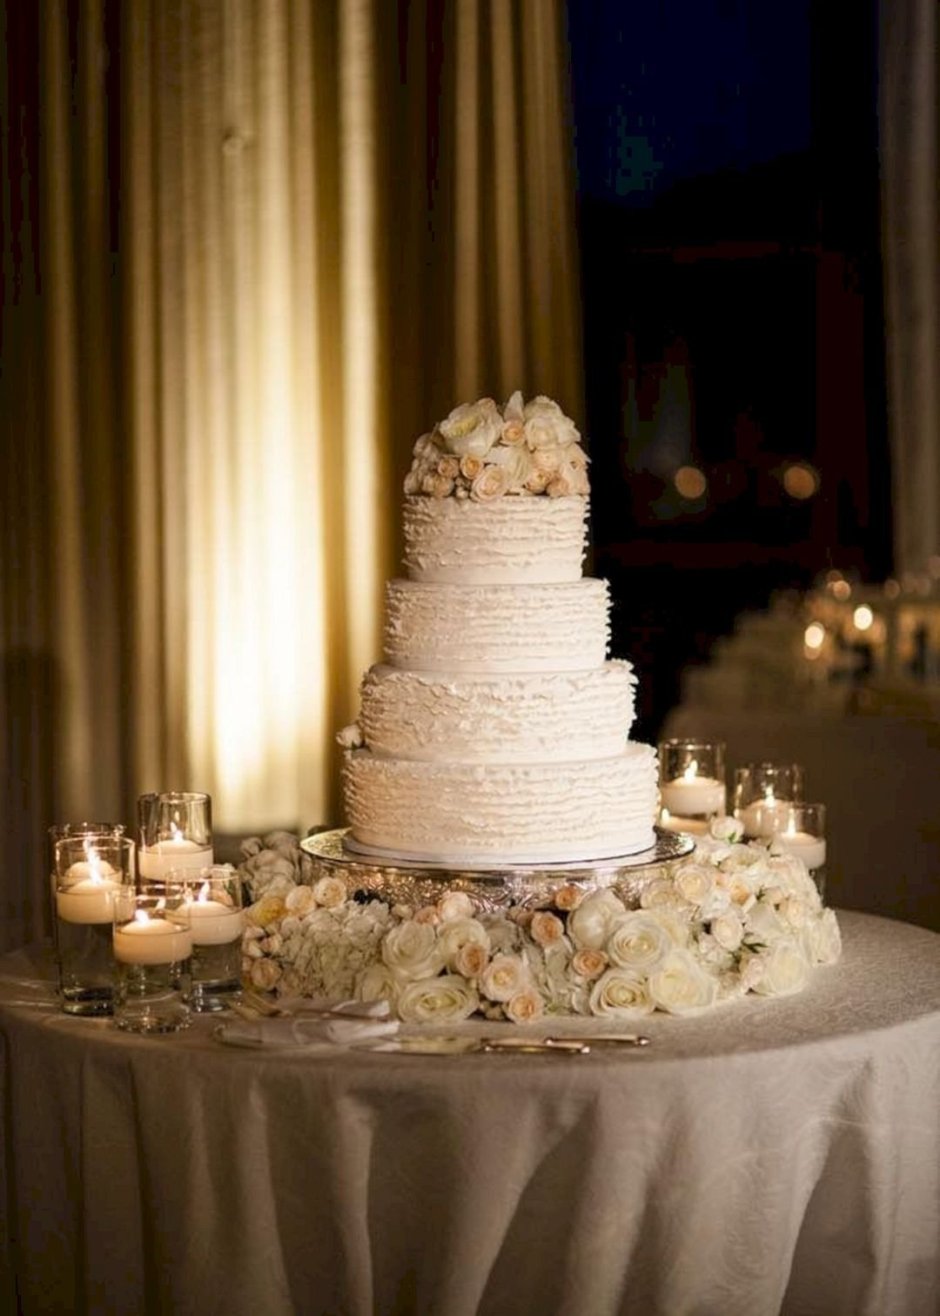 Подача свадебного торта